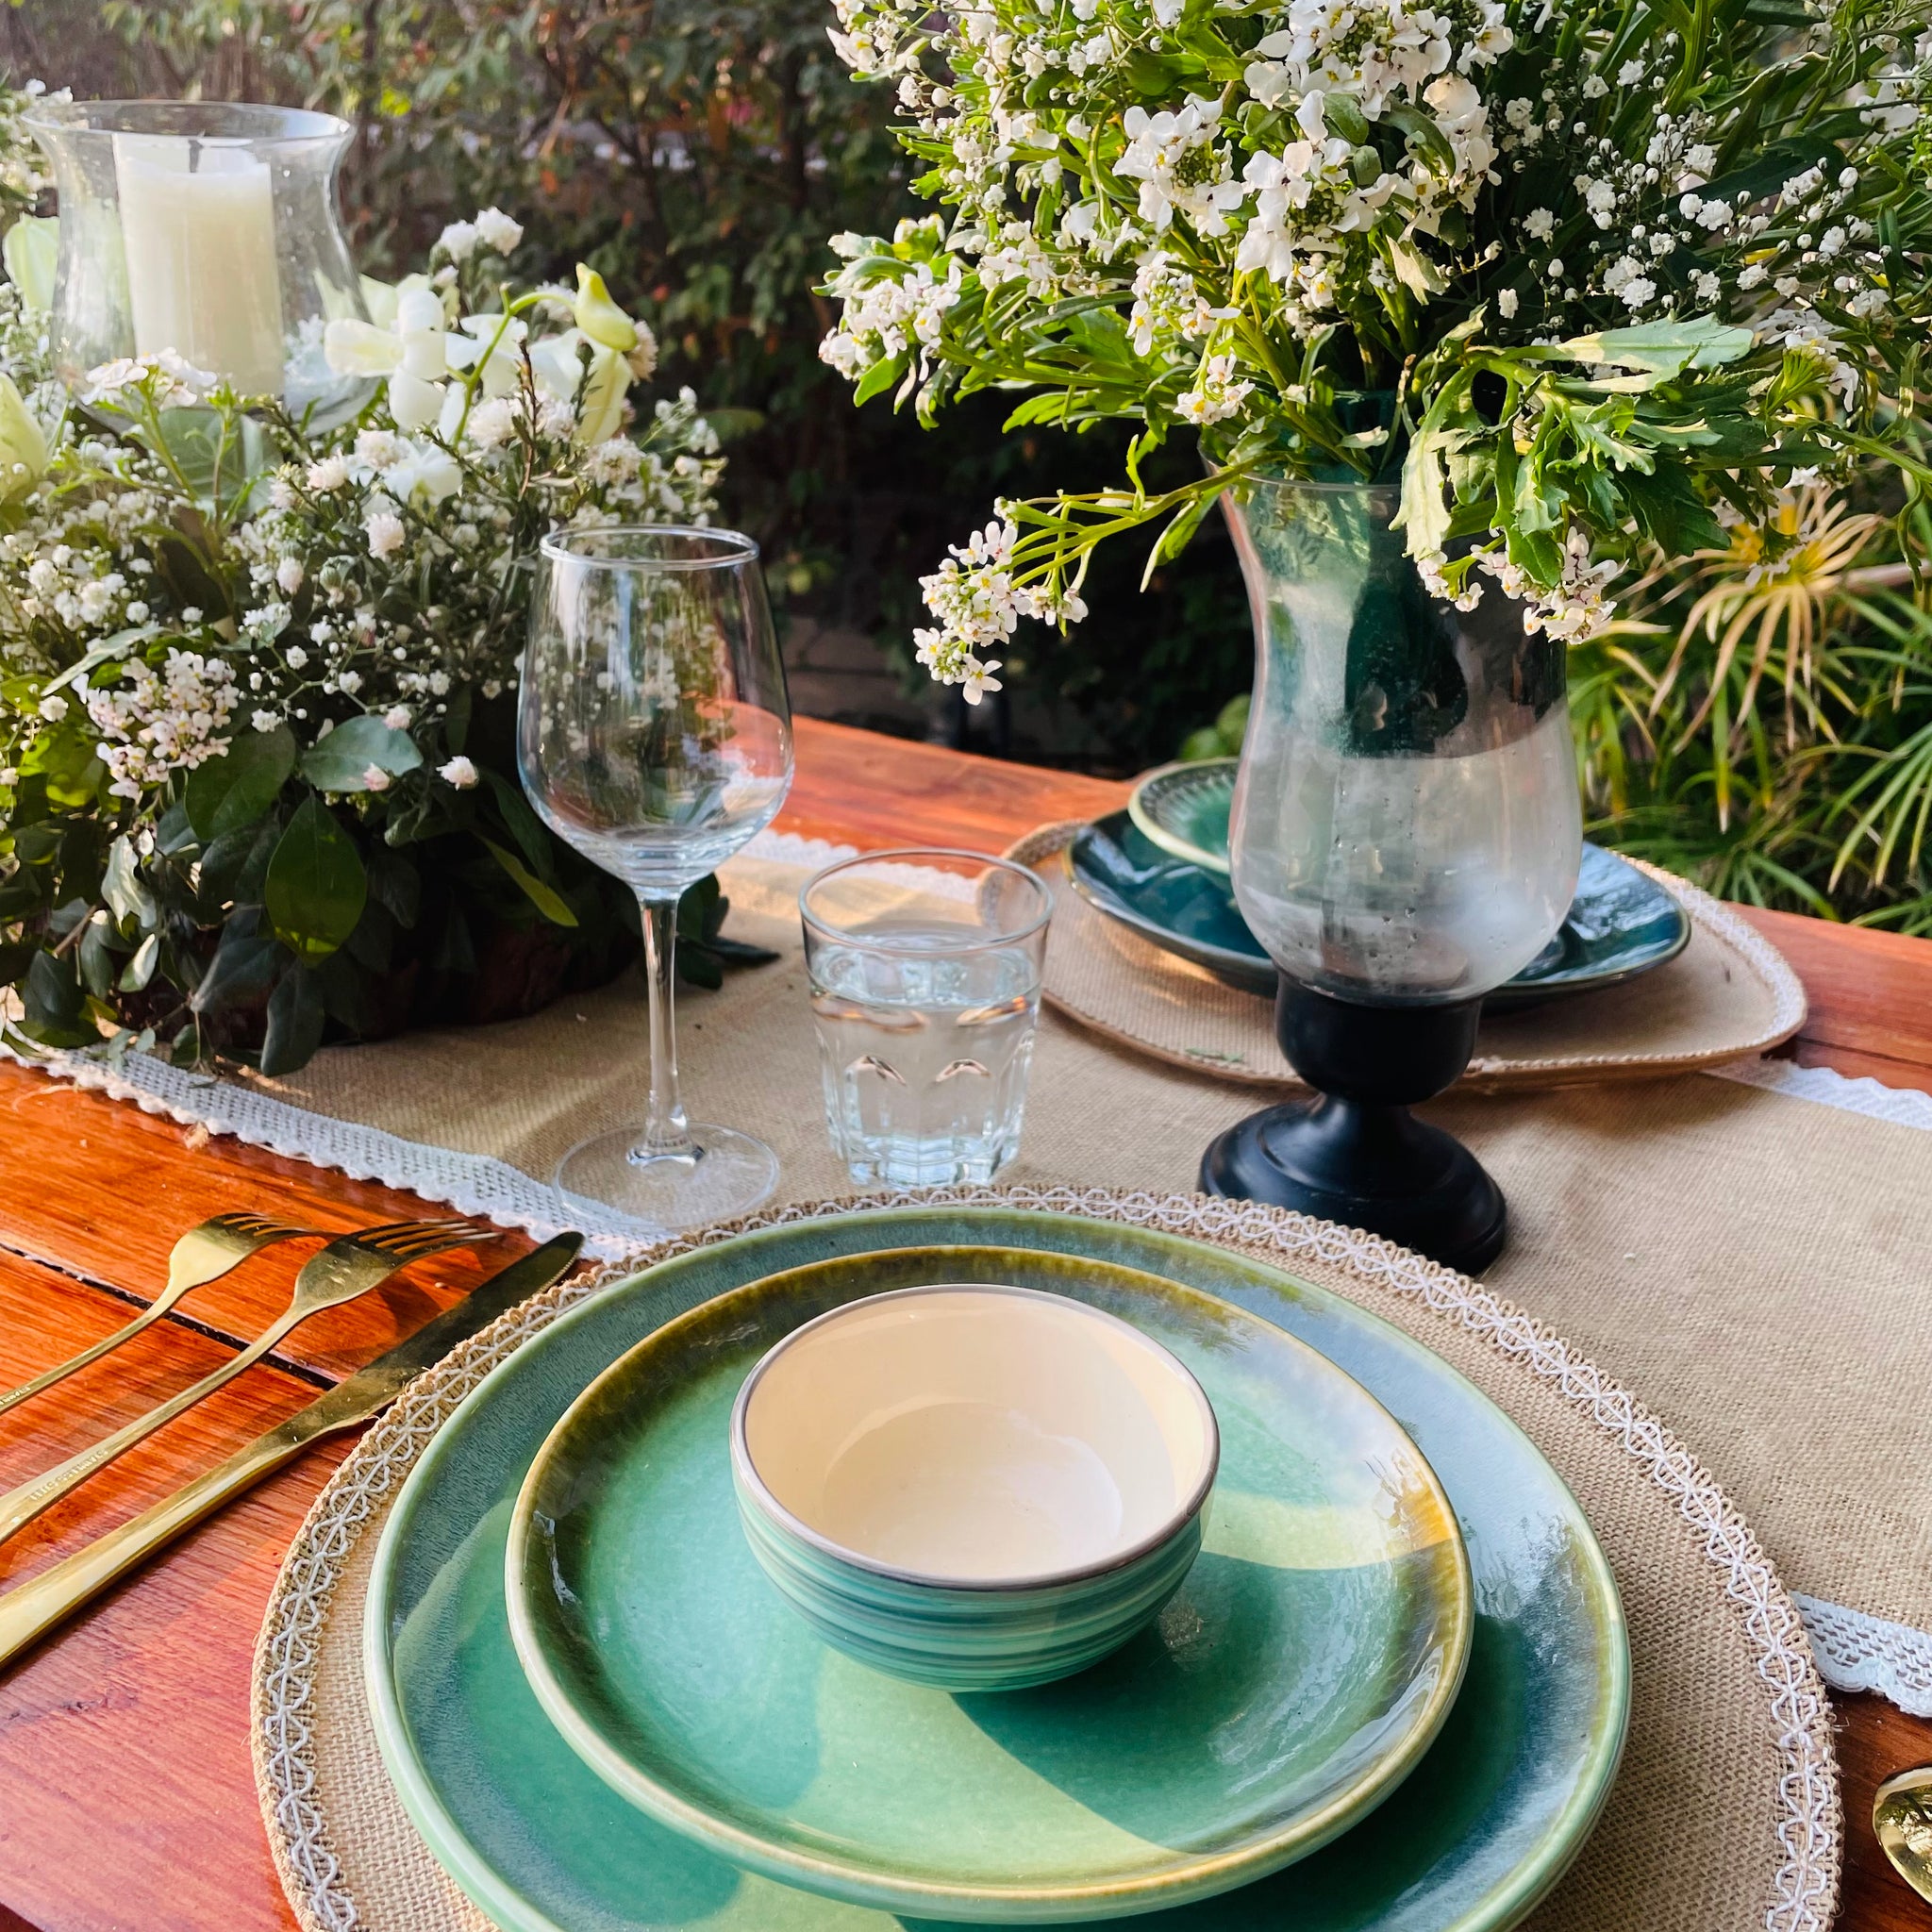 Dining Decor Enhancement, Dining Setup Enhancement, Green Plate Set, Parna Turquoise Blue Green Plate Set, Retro Design, Royal Dining Set, Rustic Feel, Turquoise Blue Plate Set, Uneven Textures, tesu